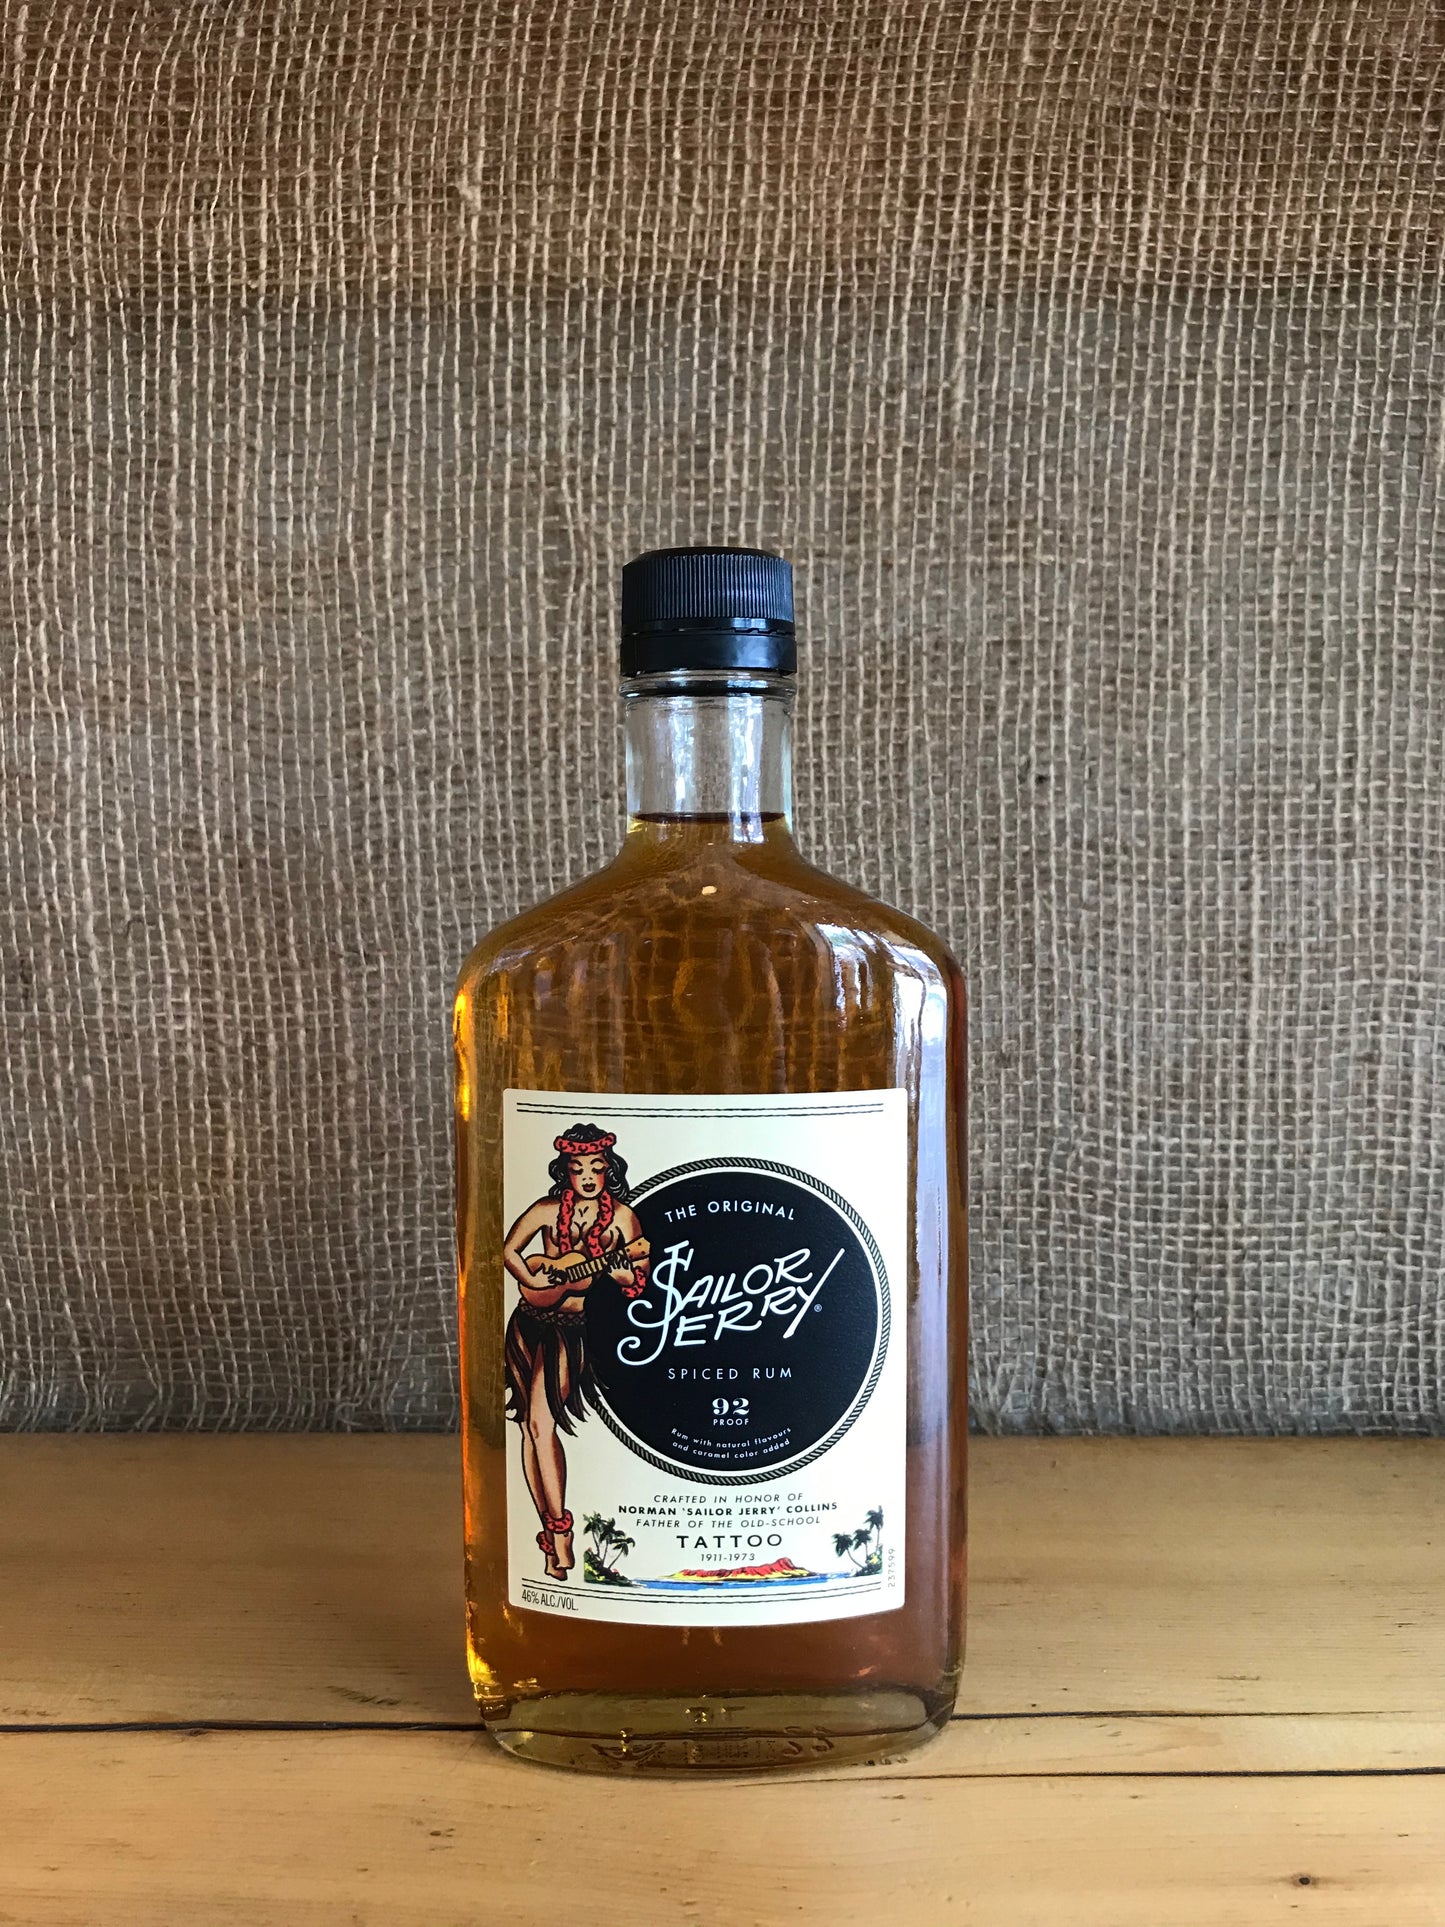 Sailor Jerry Spiced Rum 375